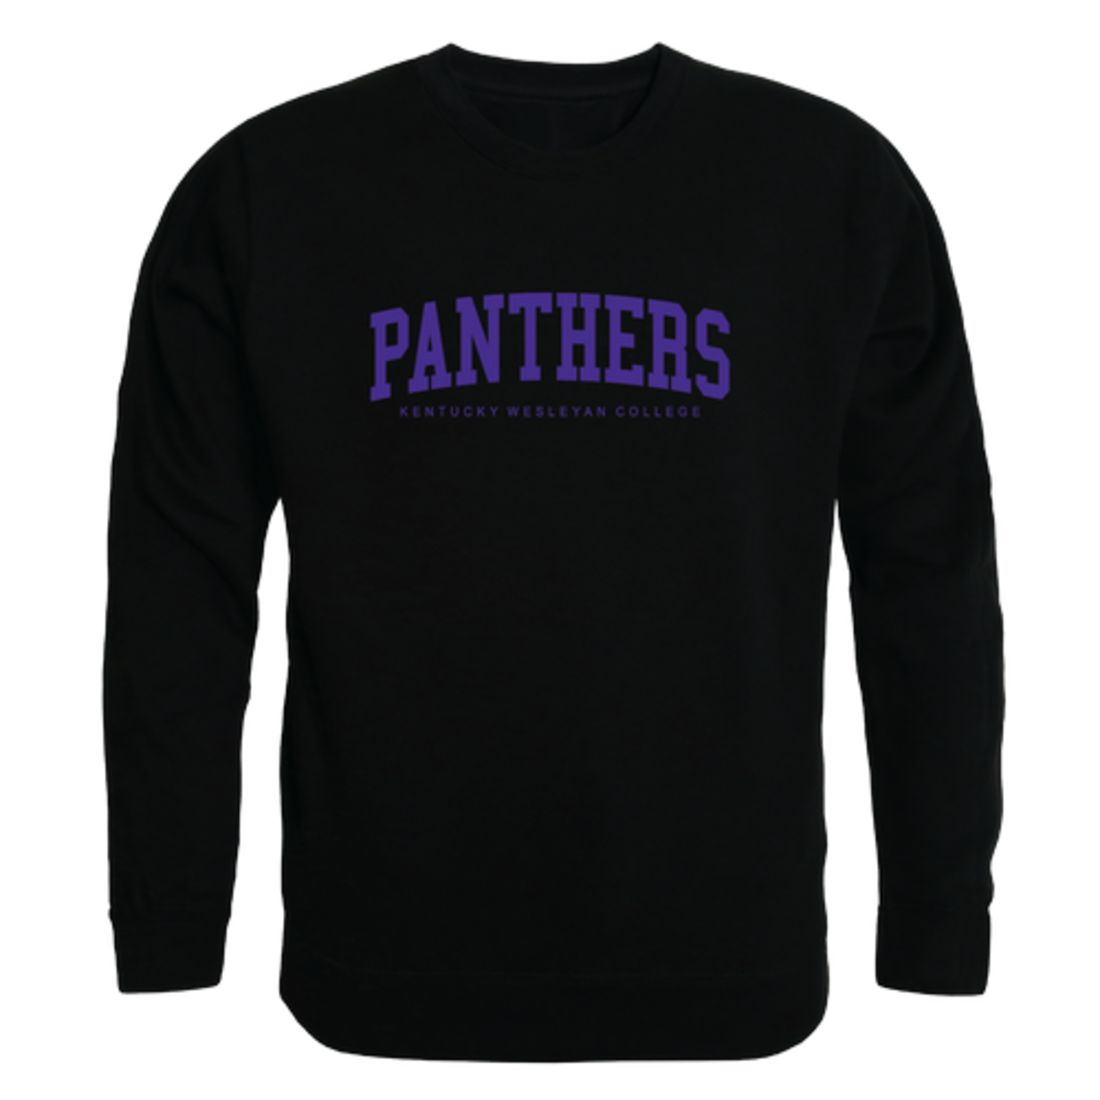 Kentucky-Wesleyan-College-Panthers-Arch-Fleece-Crewneck-Pullover-Sweatshirt